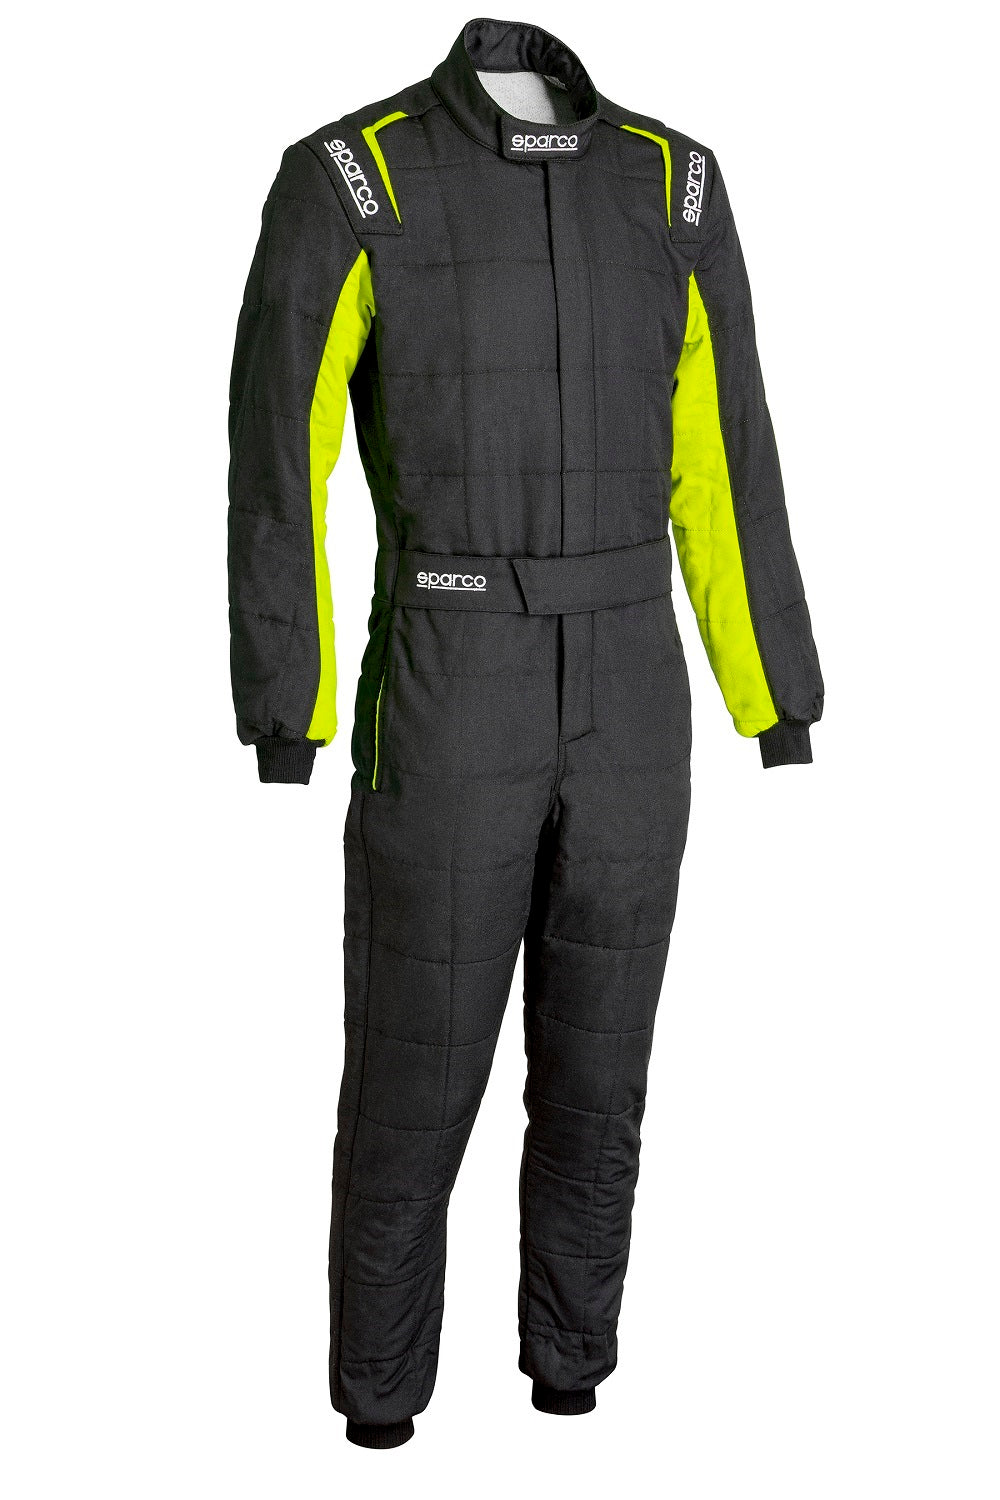 Sparco Conquest 3.0 Race Suit Black / Yellow Front Image